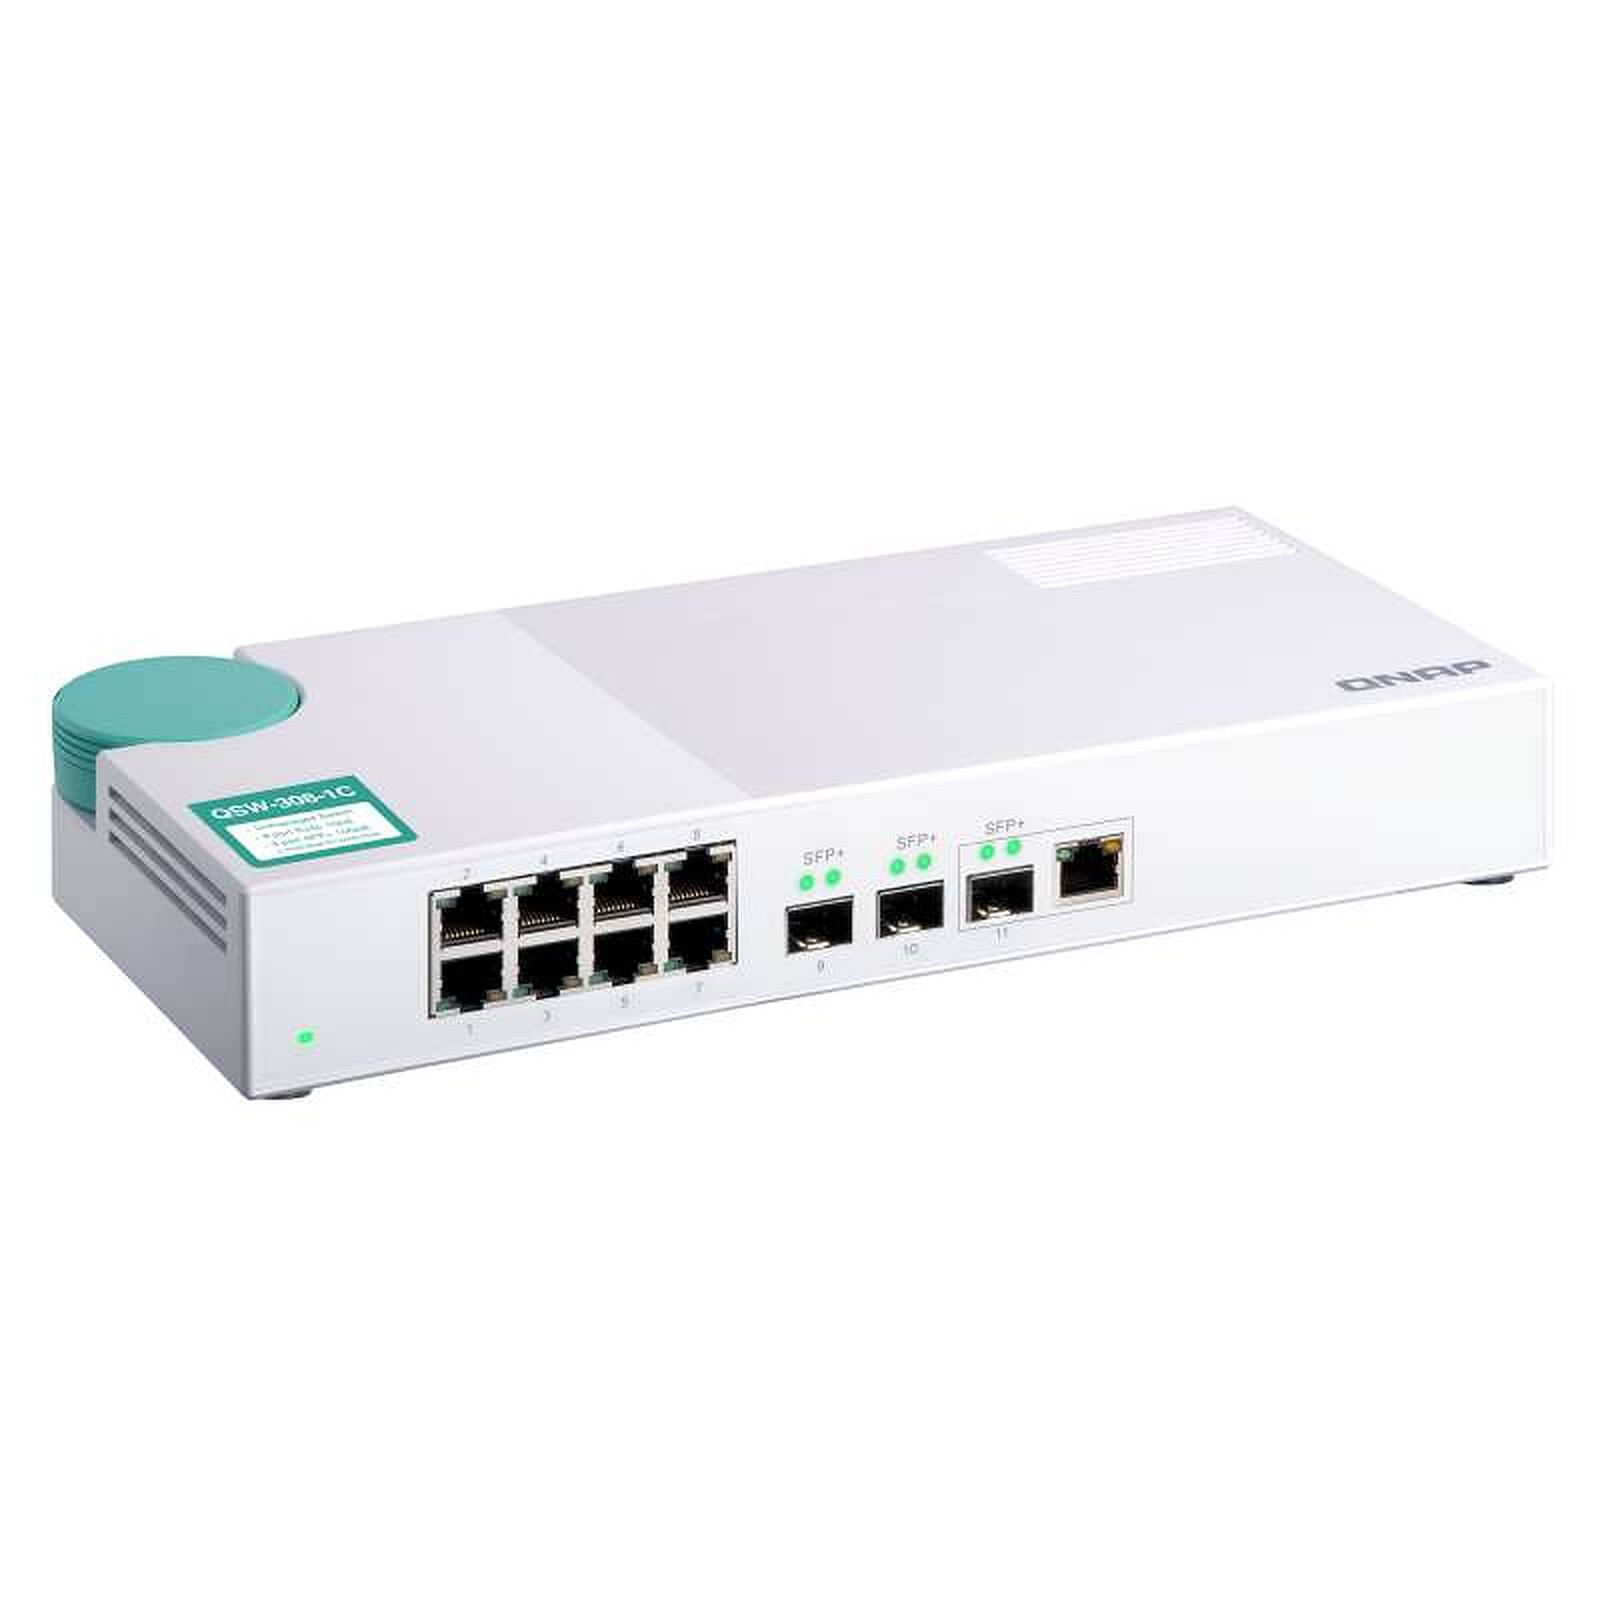 Netgear Smart Switch MS510TXPP - Switch - LDLC